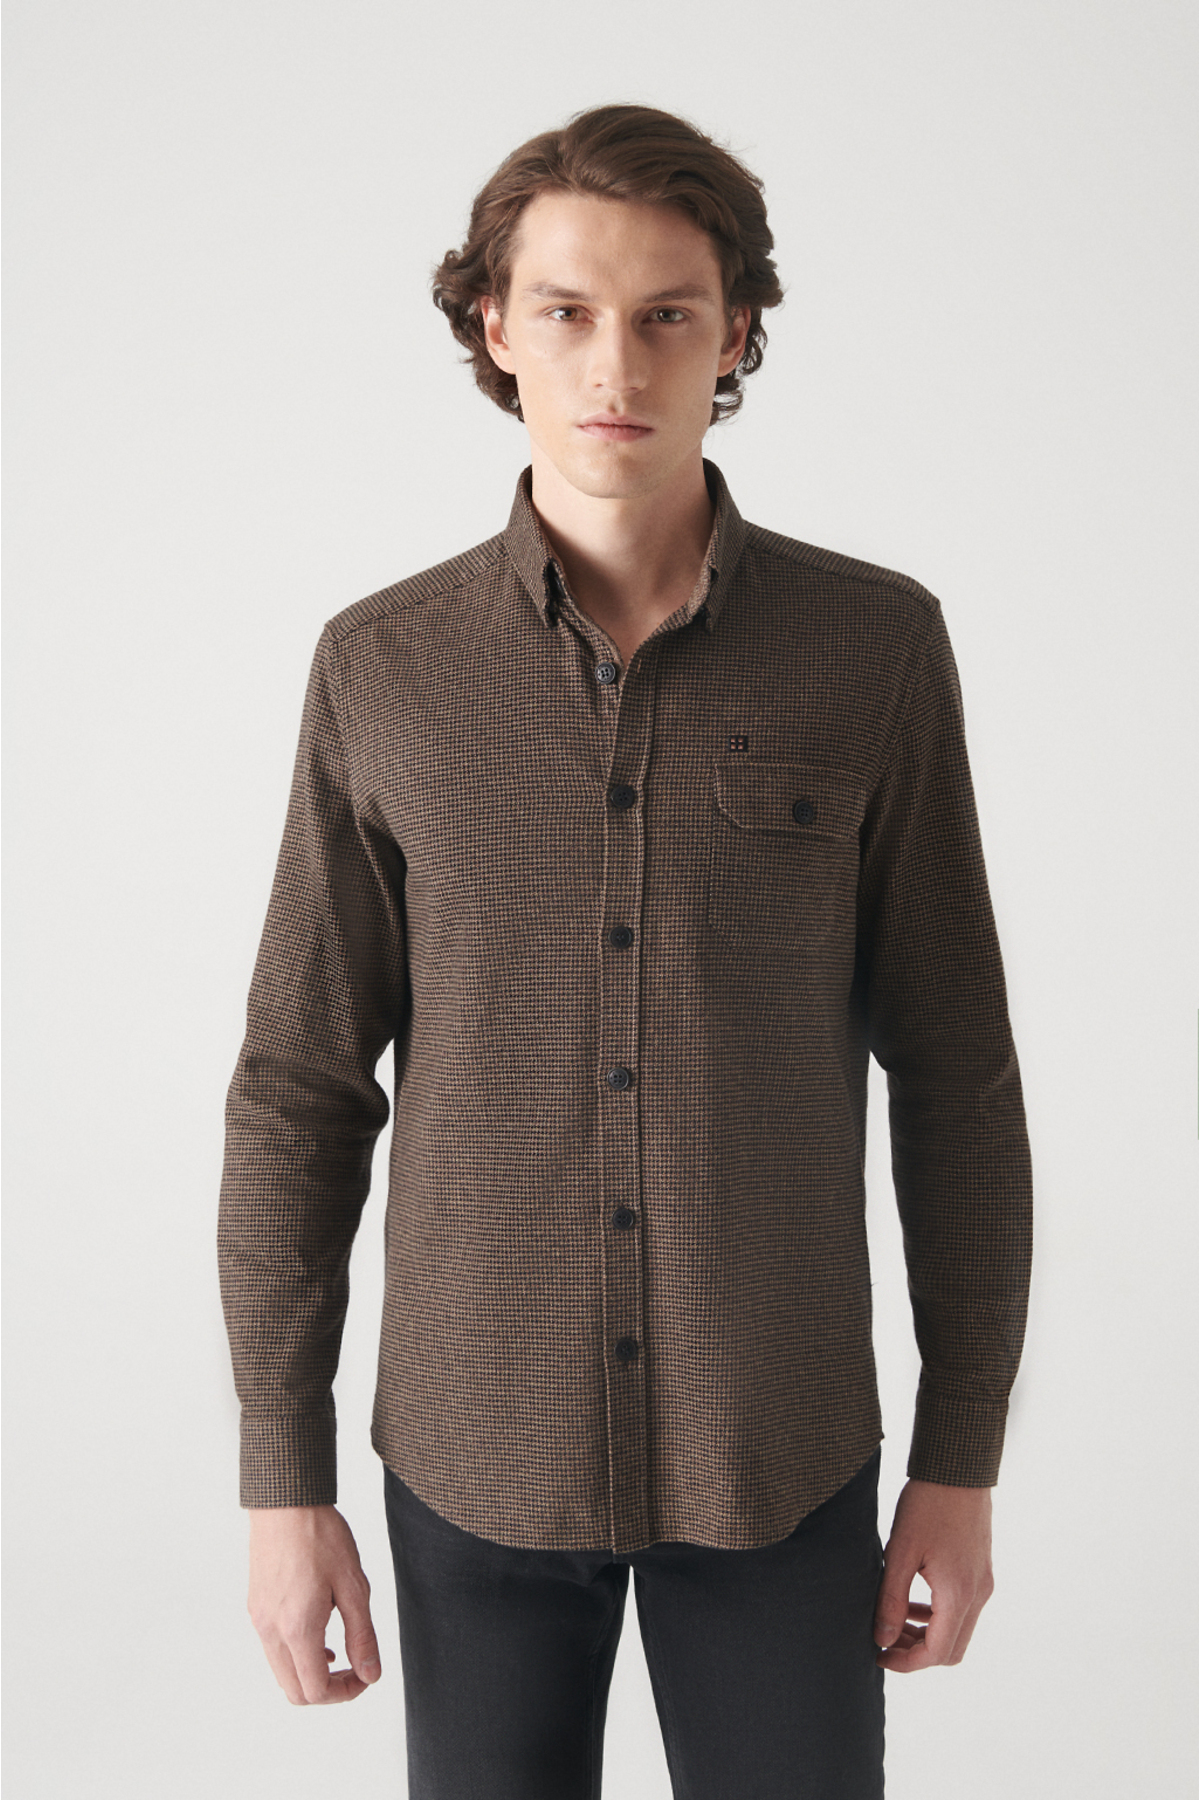 Avva Men's Brown Patterned Pocket 100% Cotton Standard Fit Regular Cut Shirt